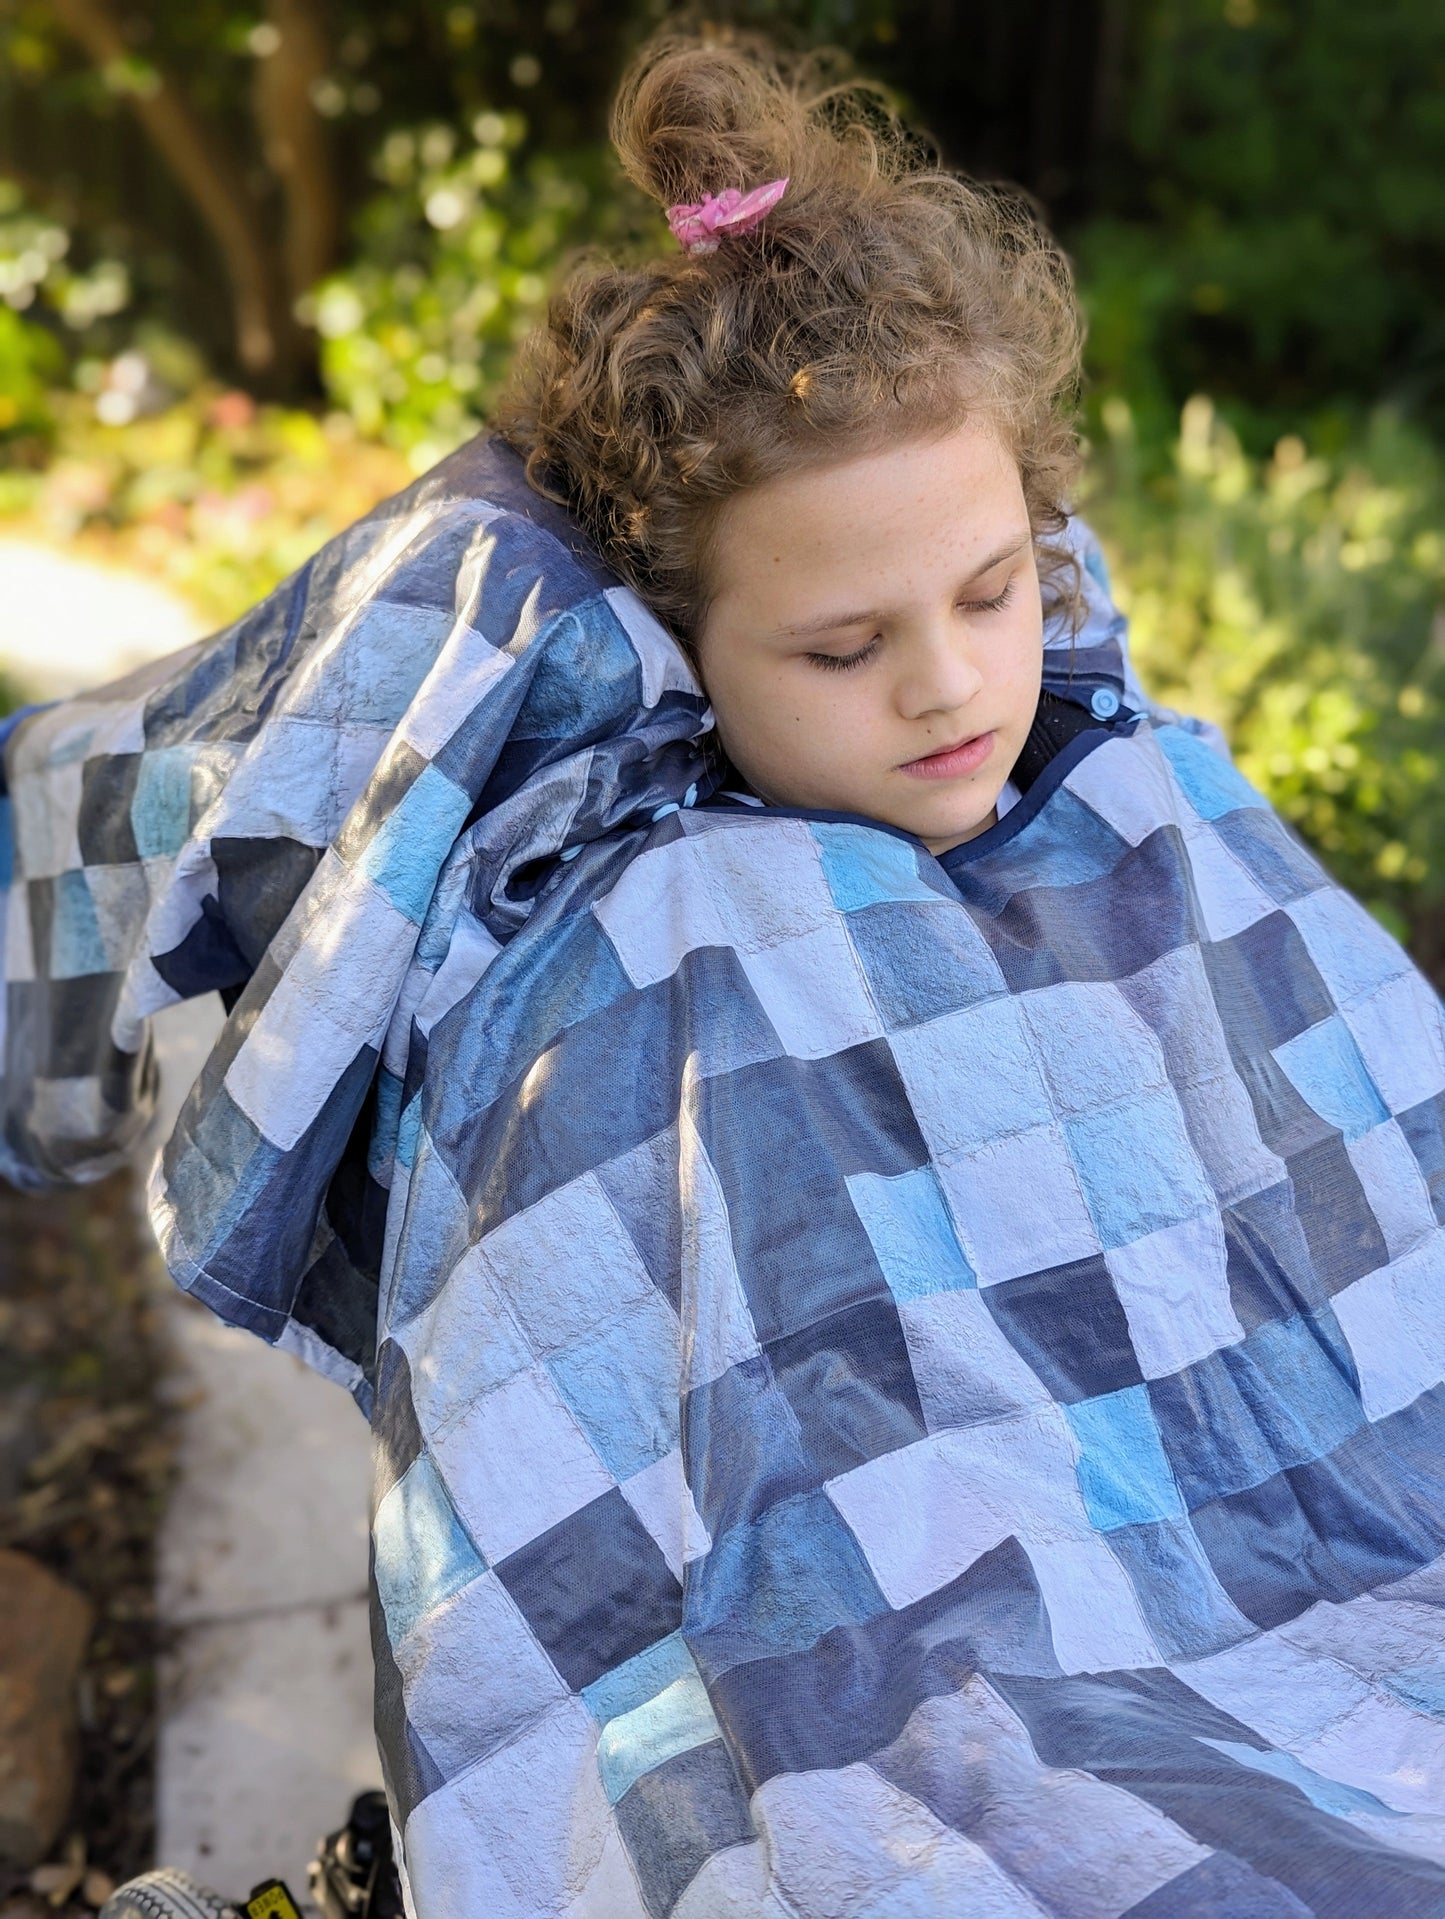 Waterproof + Minky Blanket - Premium Blankets from Mimi Blankets - Just $90! Shop now at Mimi Blankets